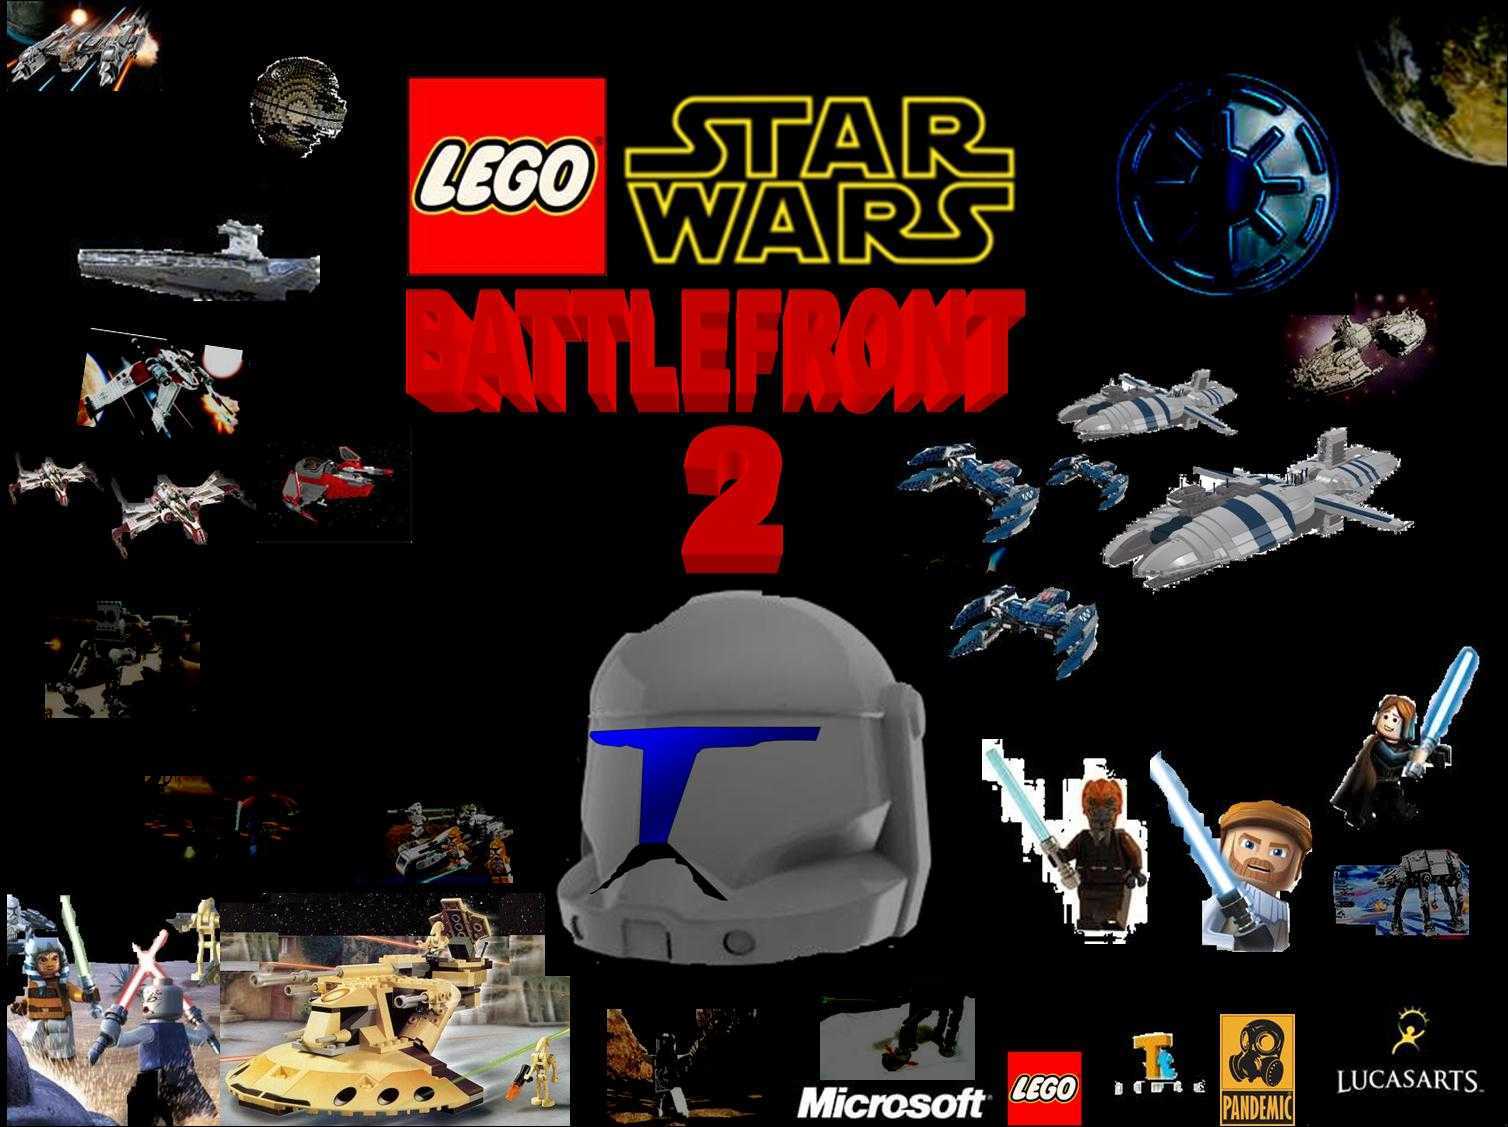 Star Wars Battlefront 2 free download